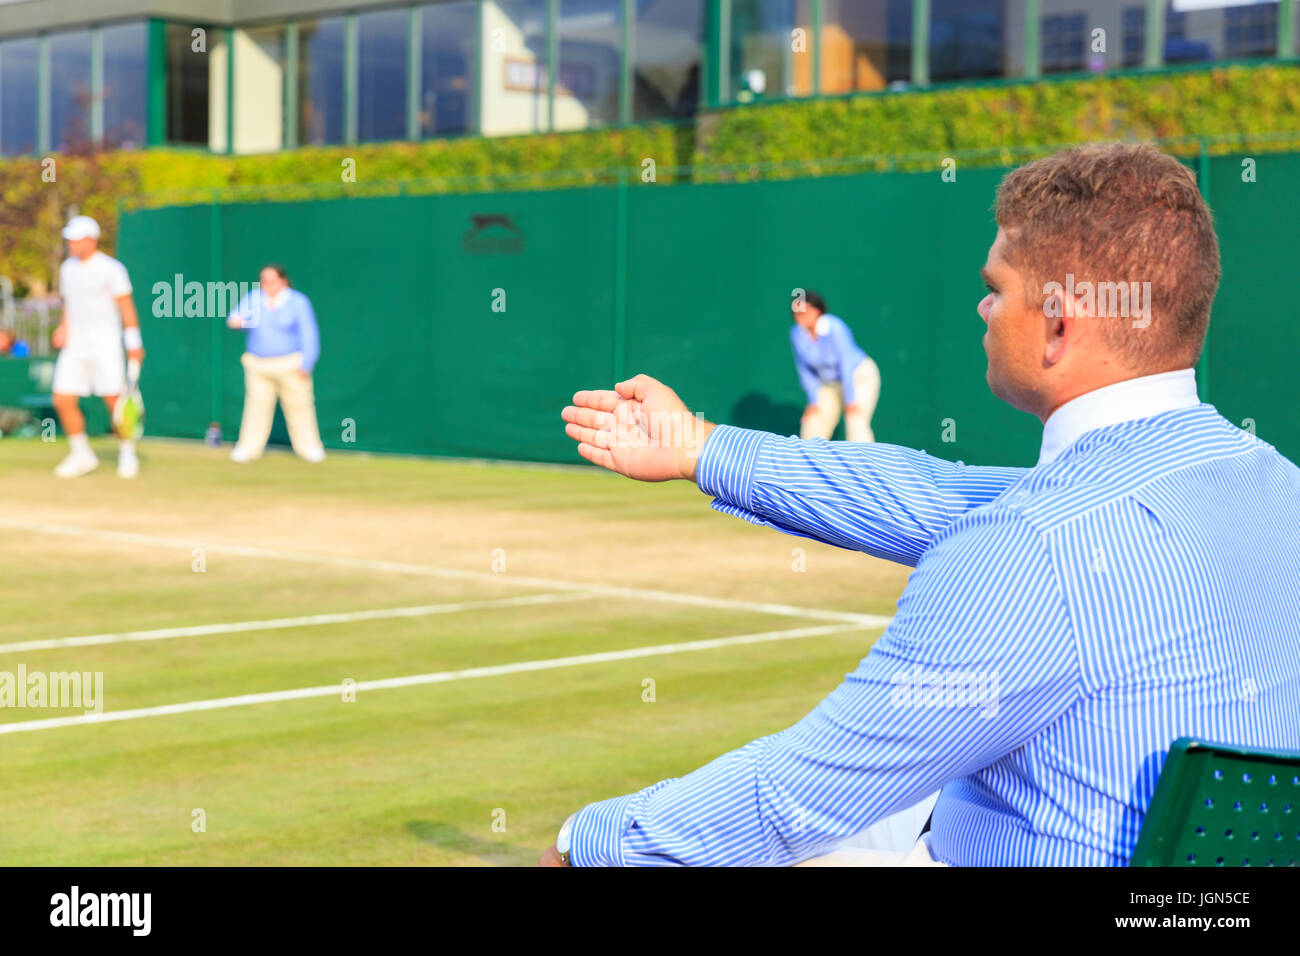 A  Wimbledon line judge, or line umpire, calls a shot during a match at the Wimbledon Tennis Championships 2017, All England Lawn Tennis and Croquet C Stock Photo